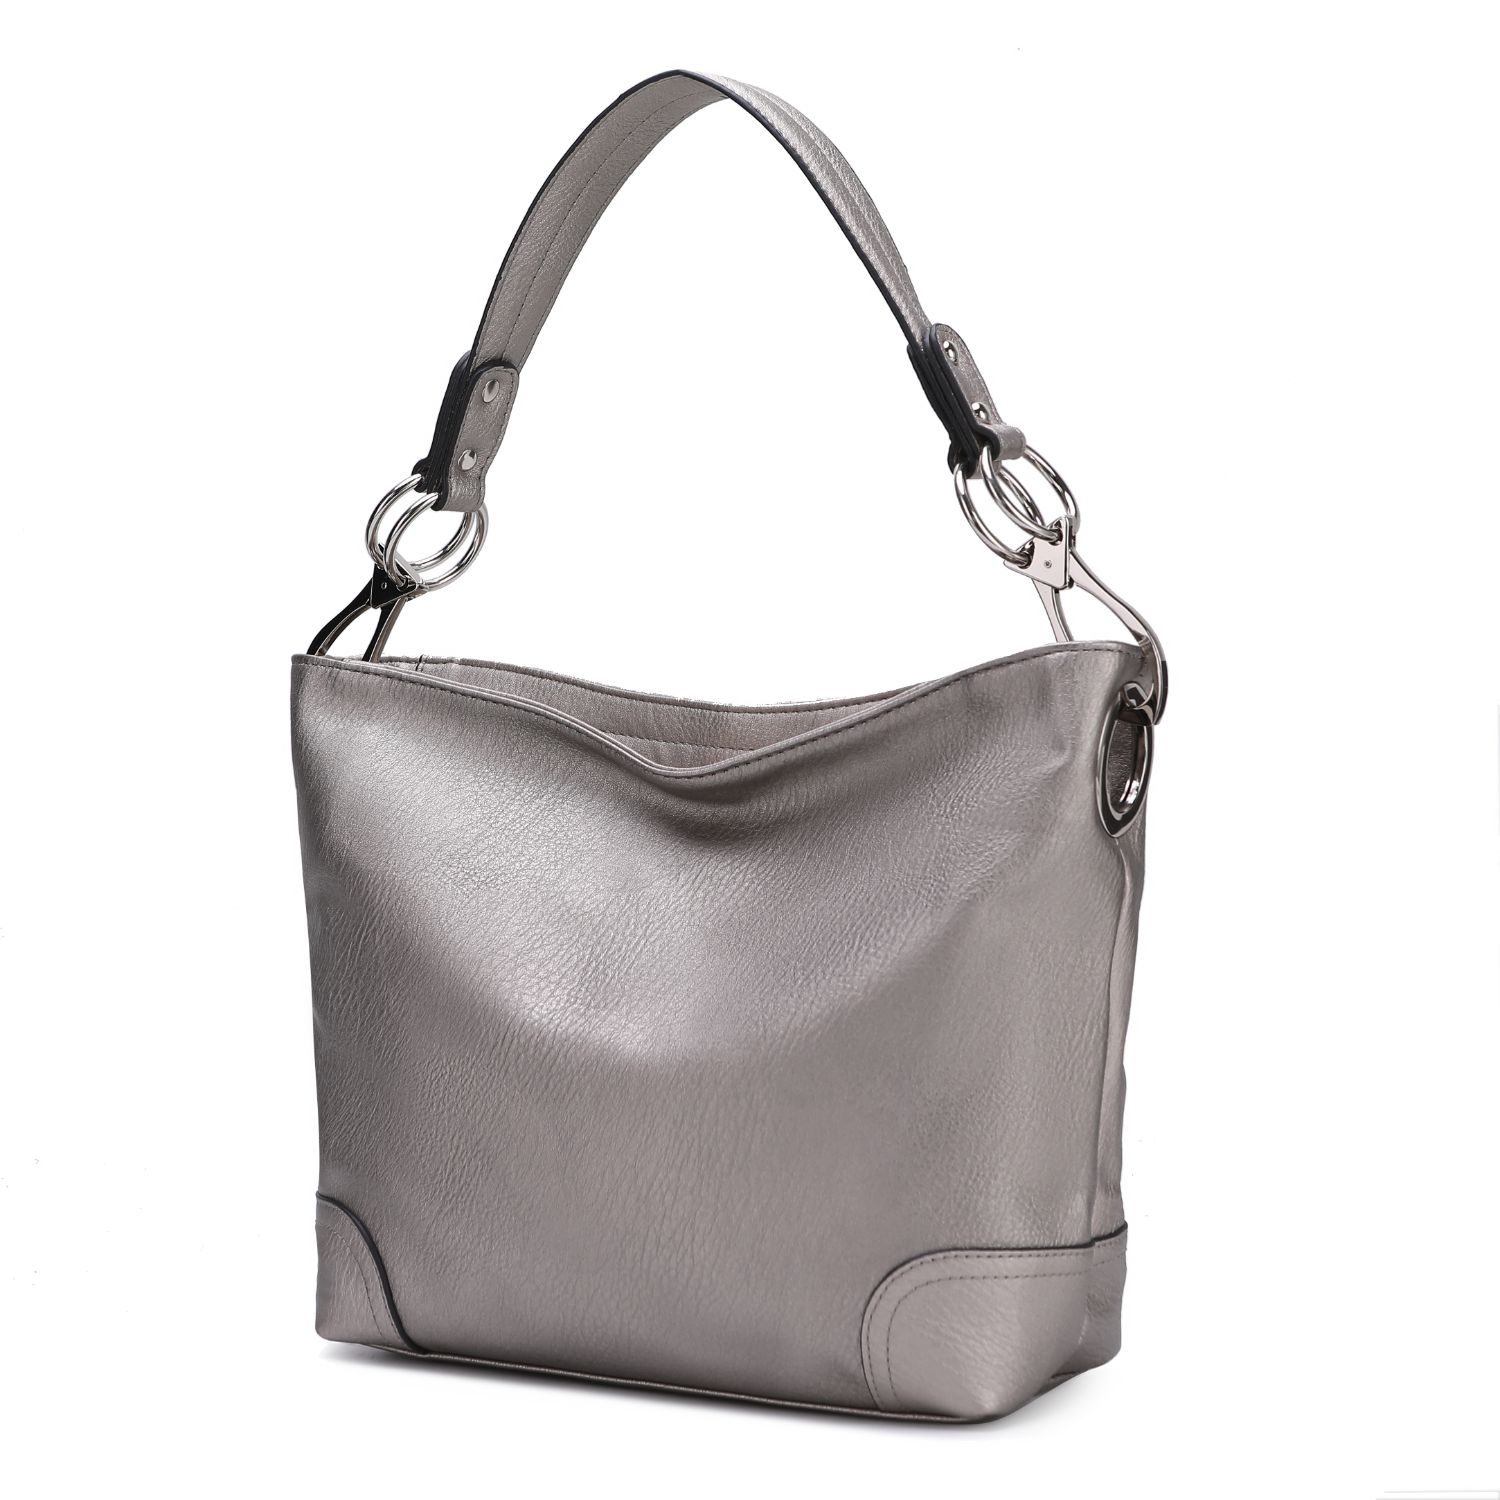 MKF Collection Emily Soft Vegan Leather Hobo Handbag By Mia K. - Pewter